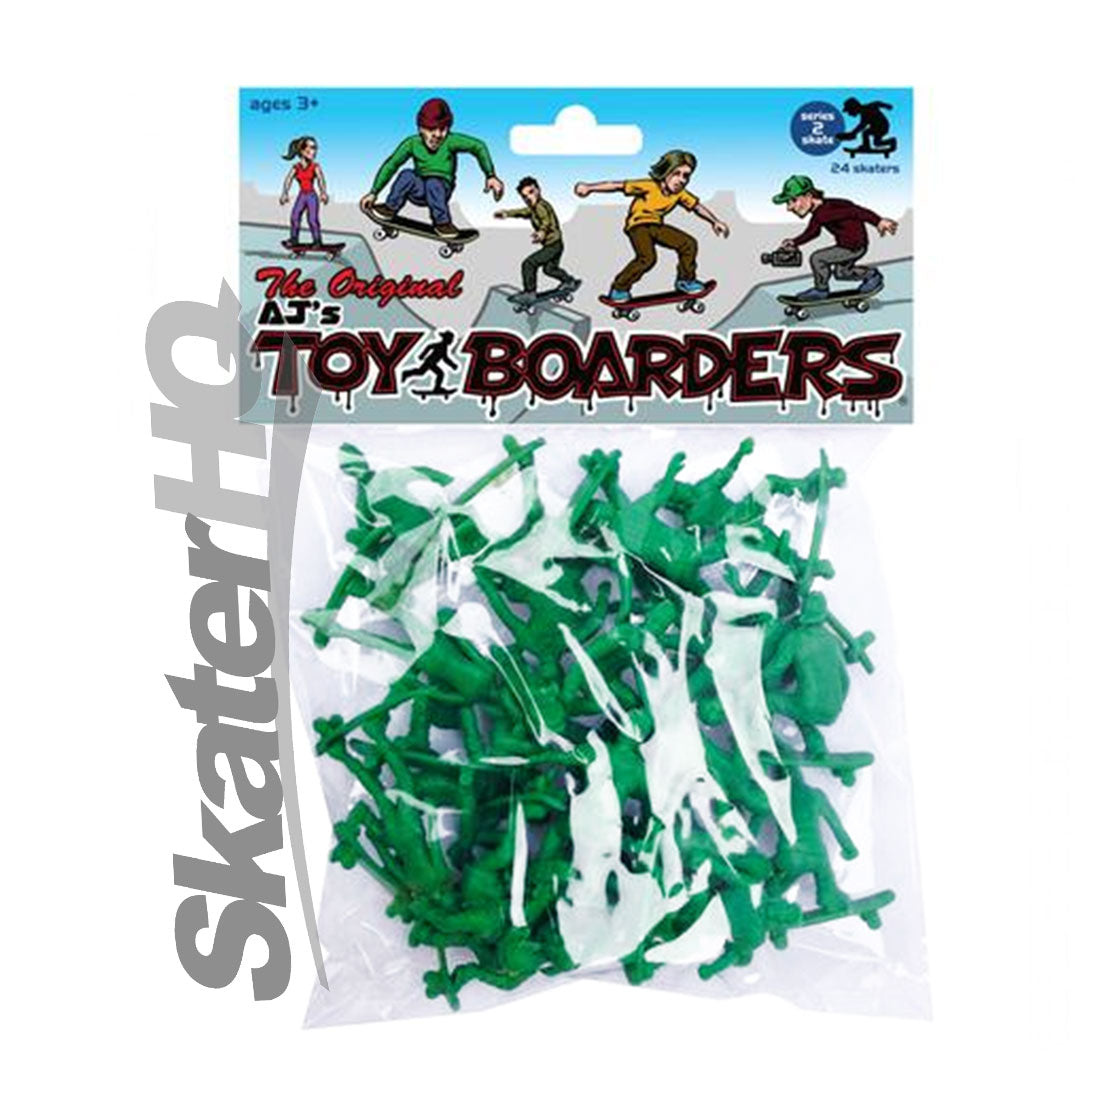 AJs Toy Boarders Skate Series 2 - Green Skateboard Accessories